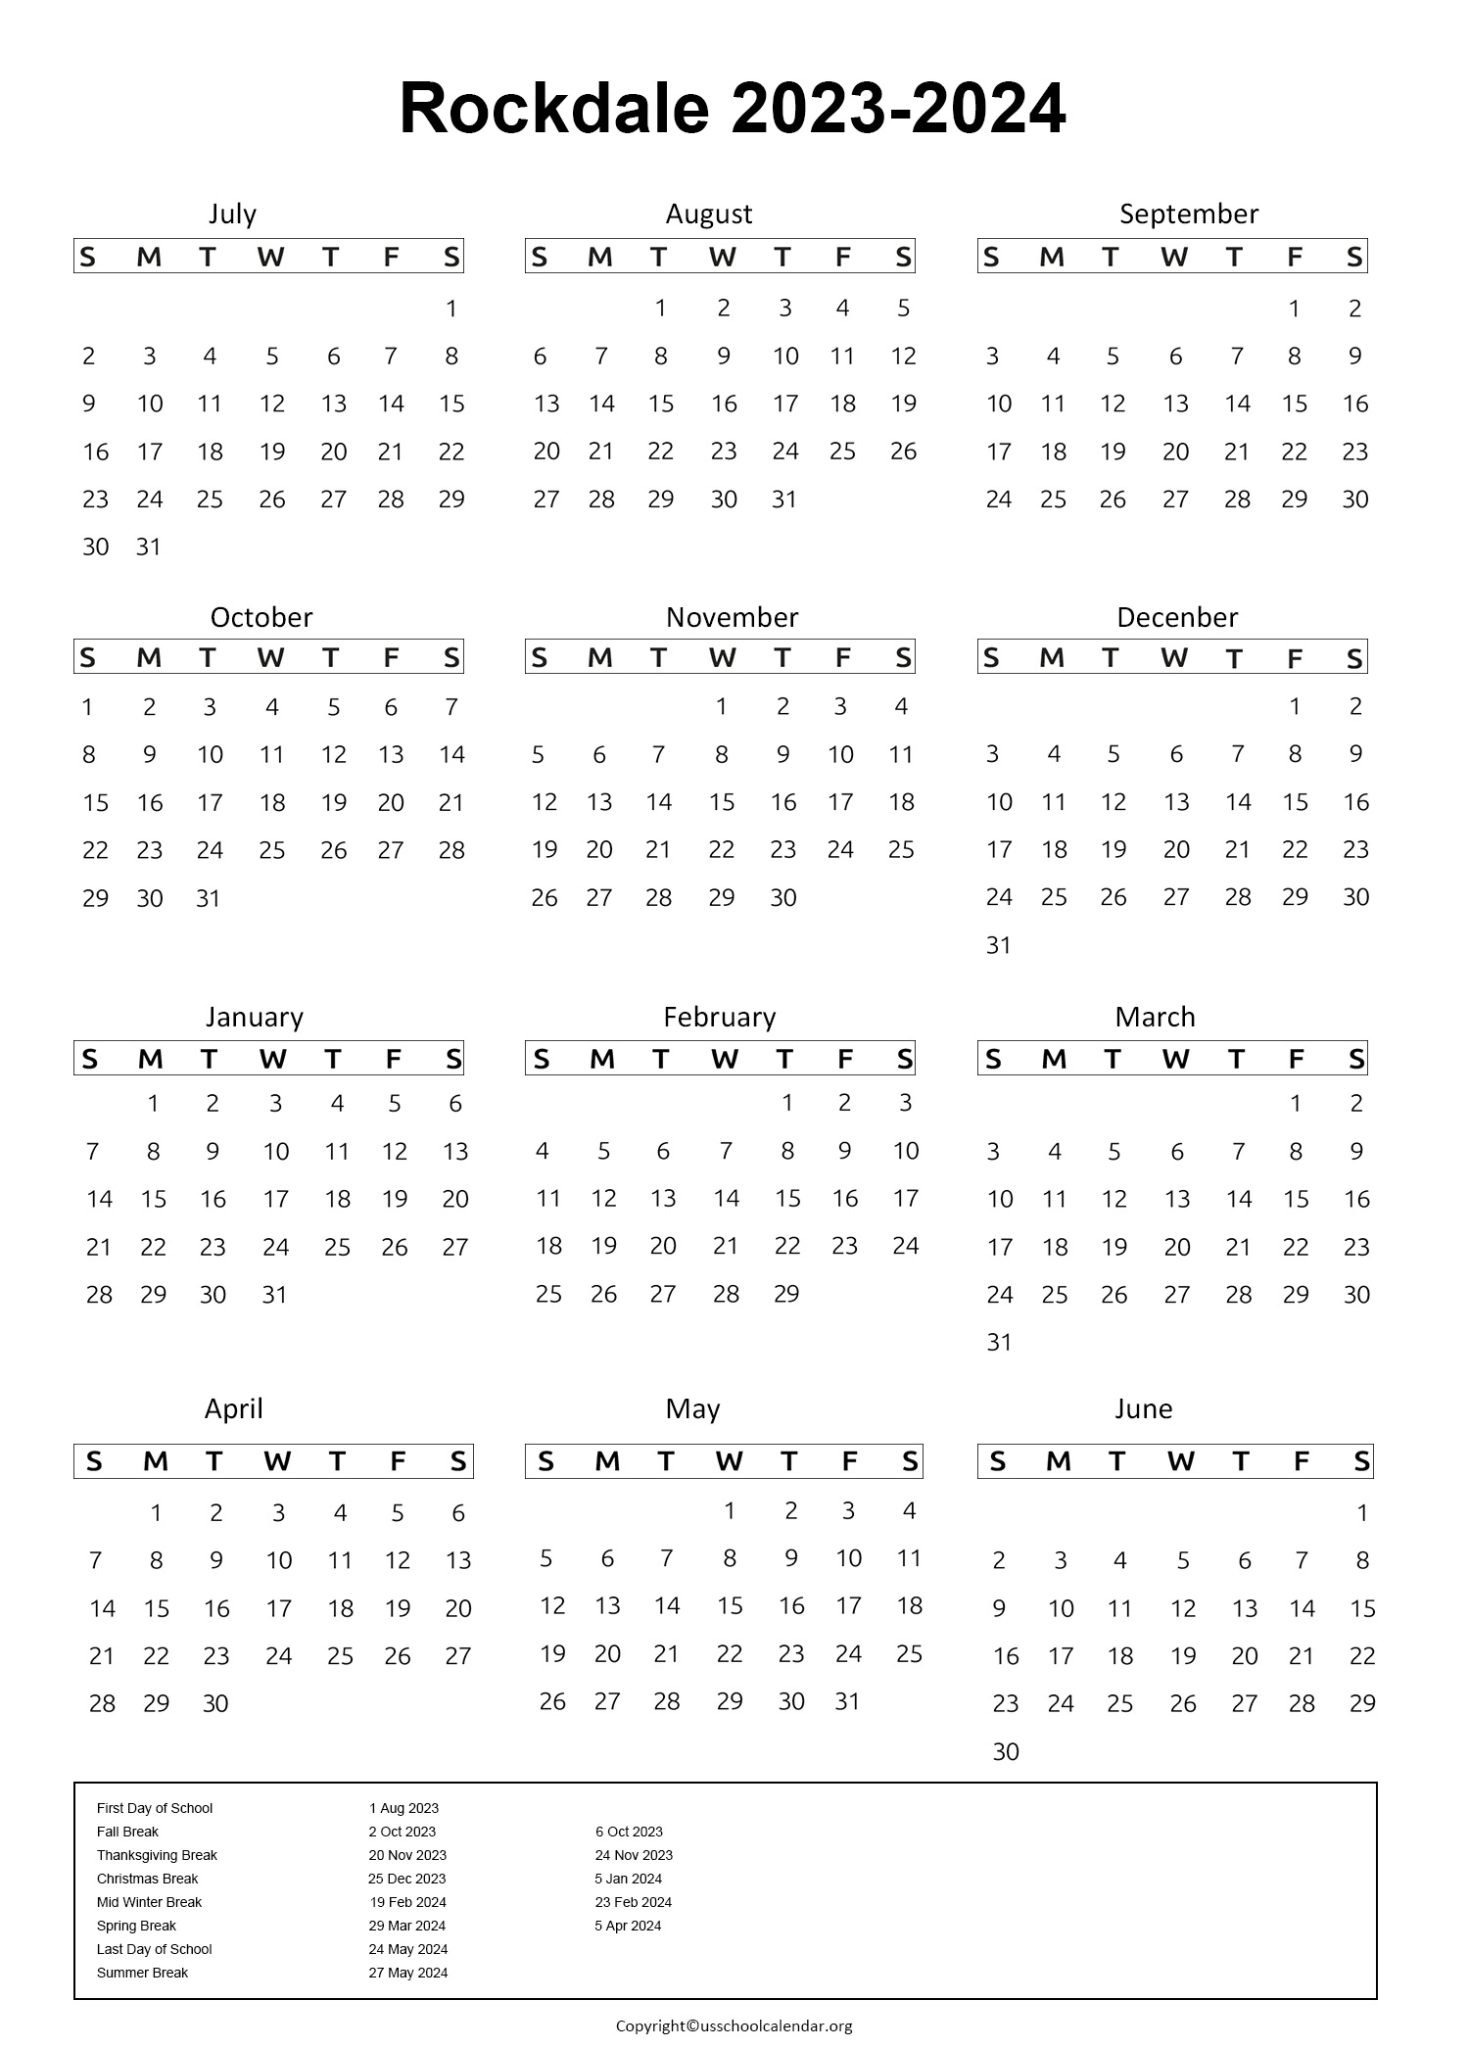 rockdale-county-schools-calendar-with-holidays-2023-2024